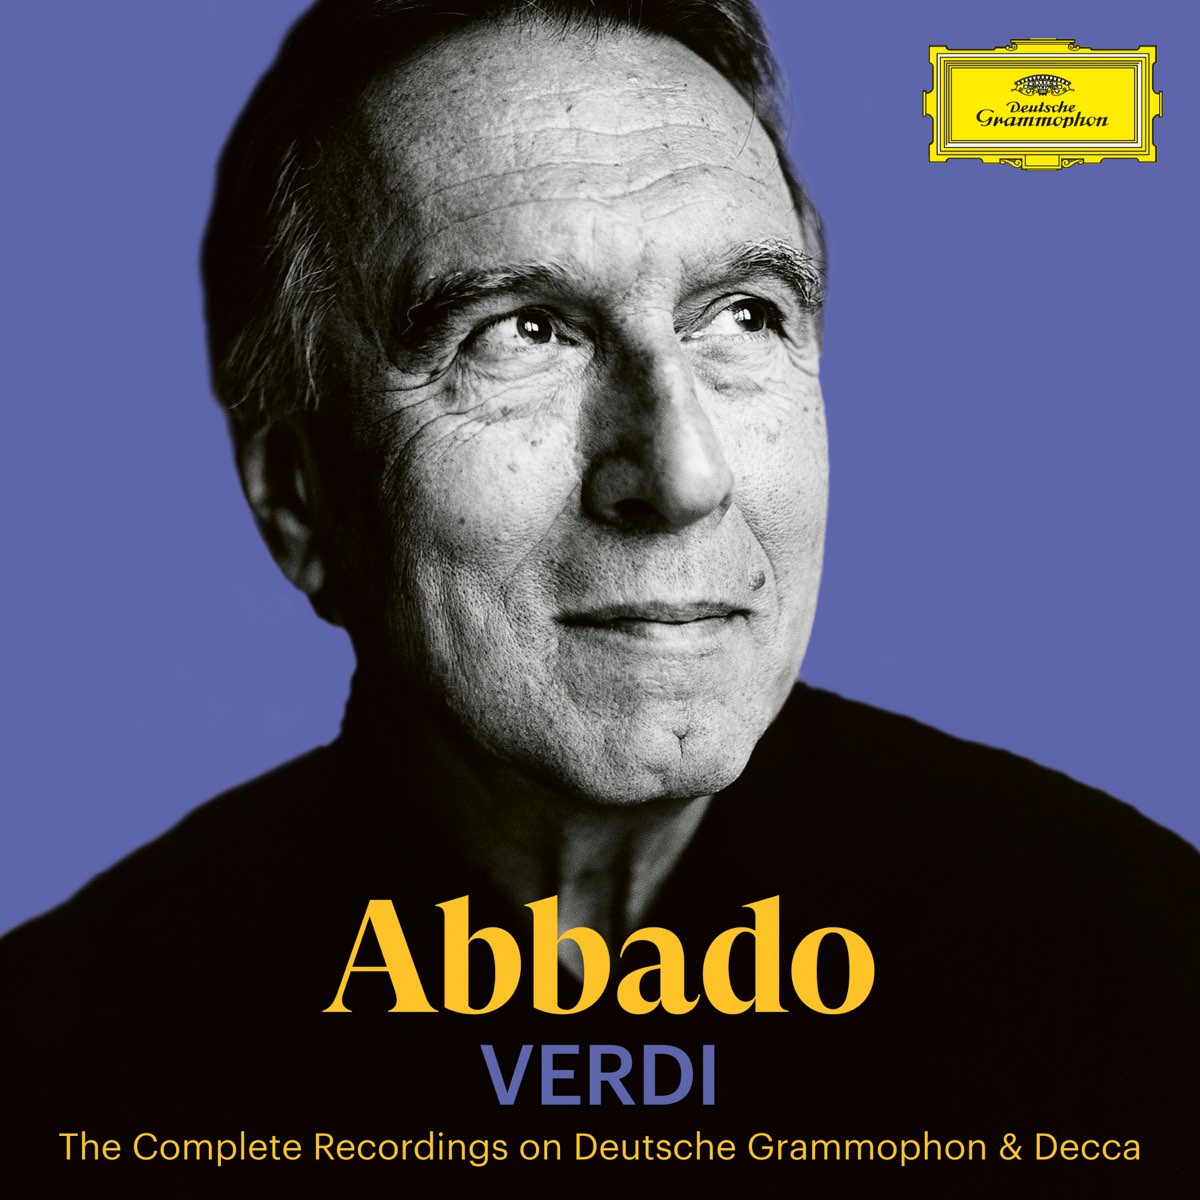 ‎Abbado: Verdi - Album by Claudio Abbado - Apple Music